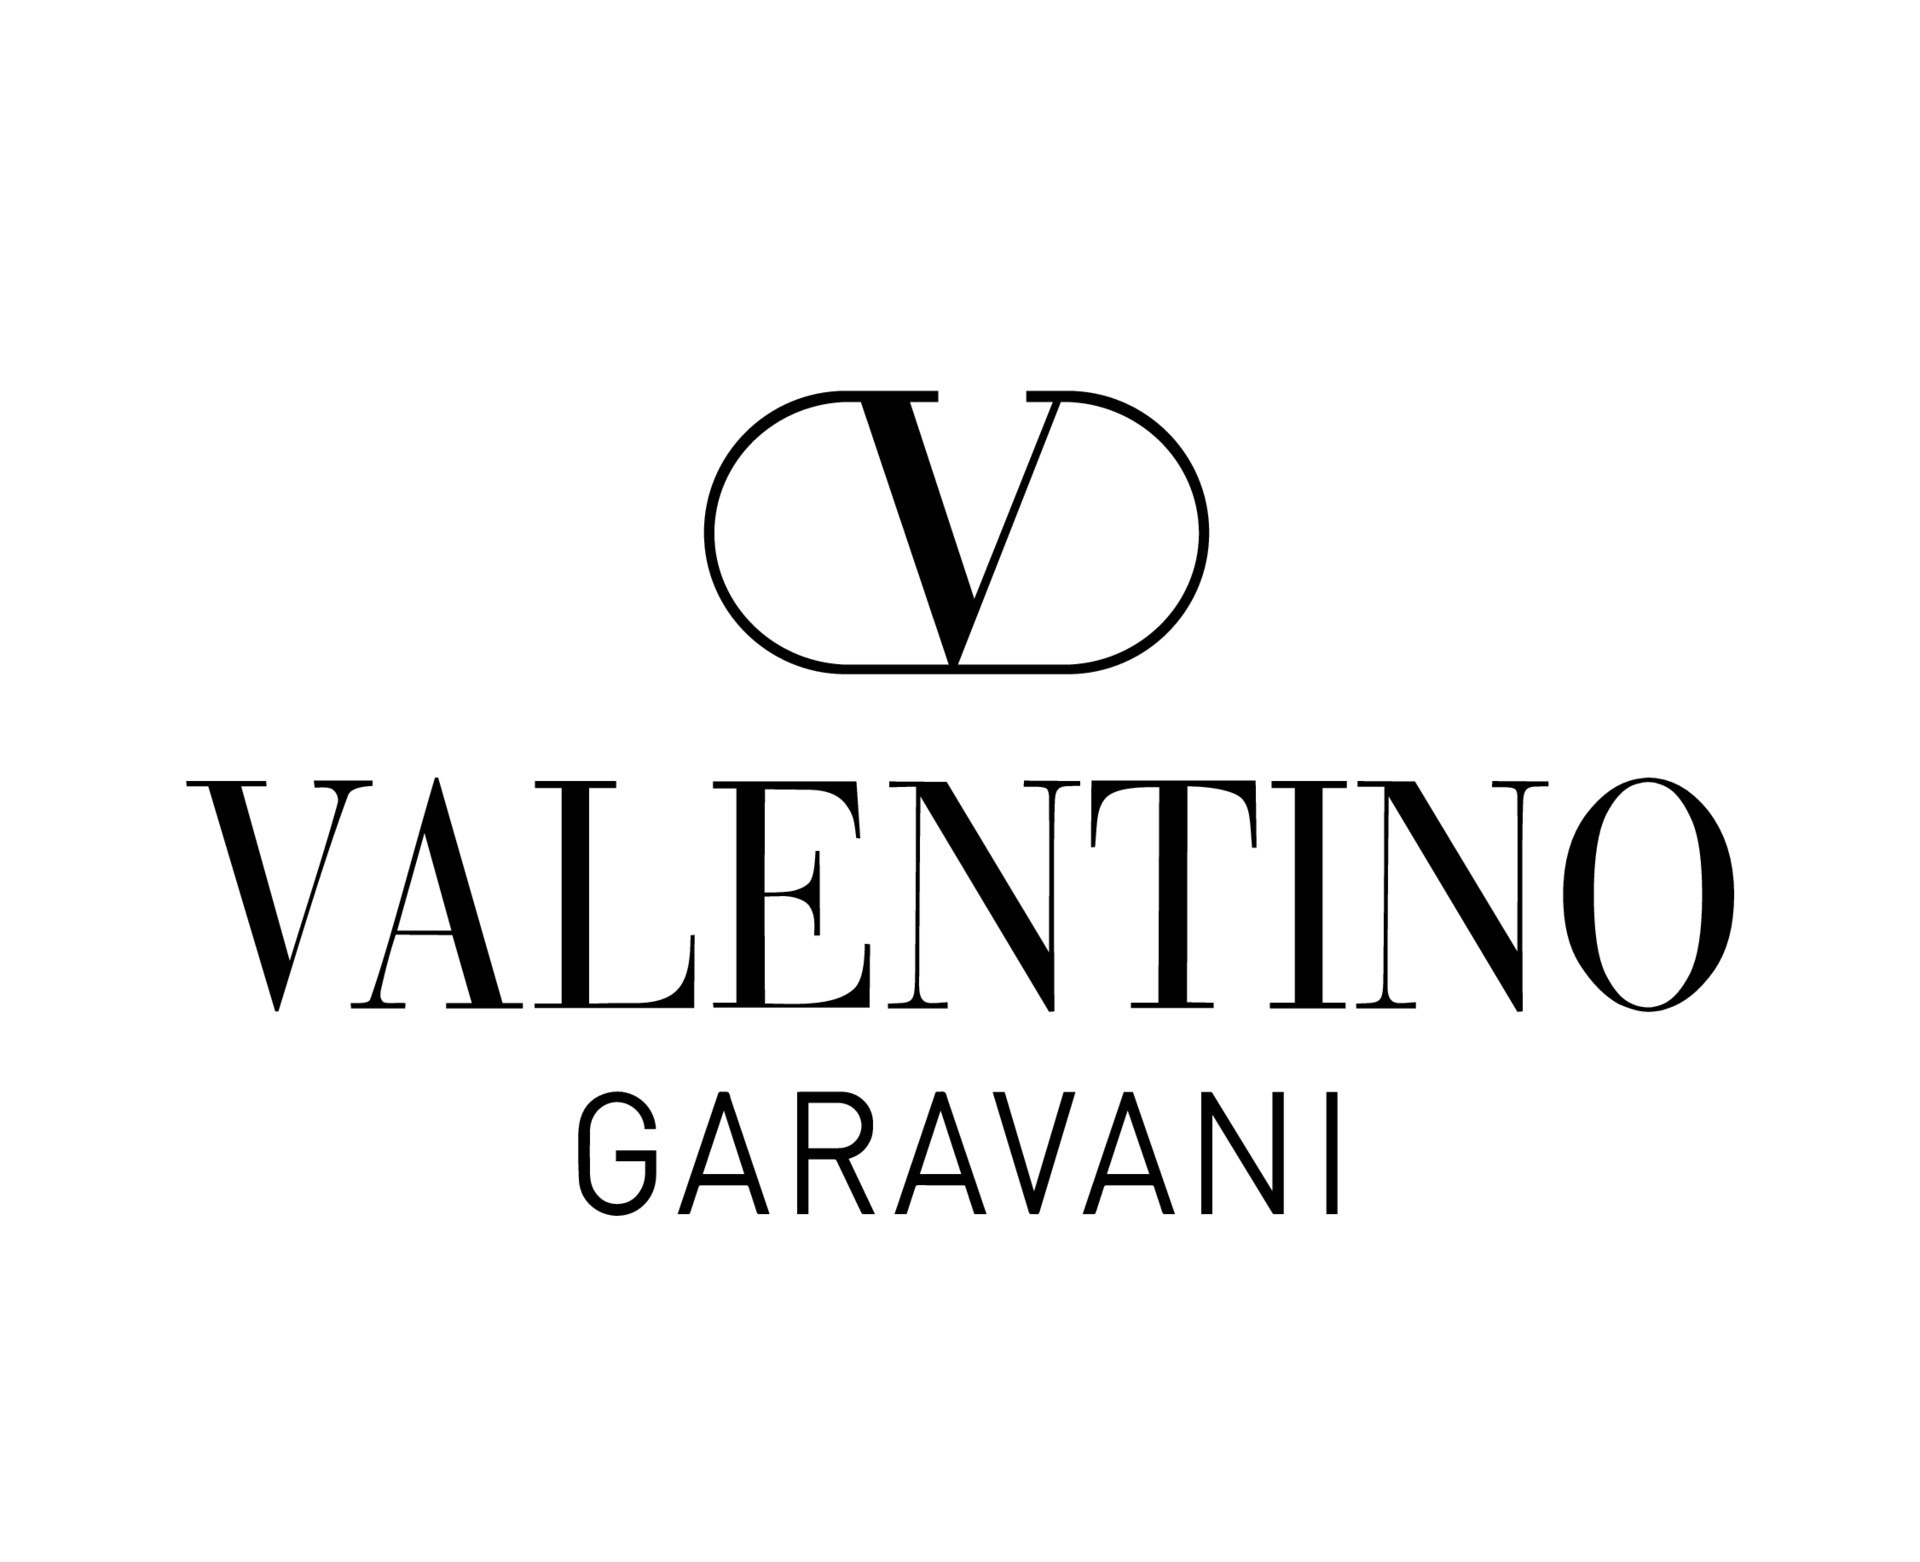 Valentino Garavani Brand Symbol Logo Clothes Design Icon Vector Illustration 24131401 Vector Art Vecteezy